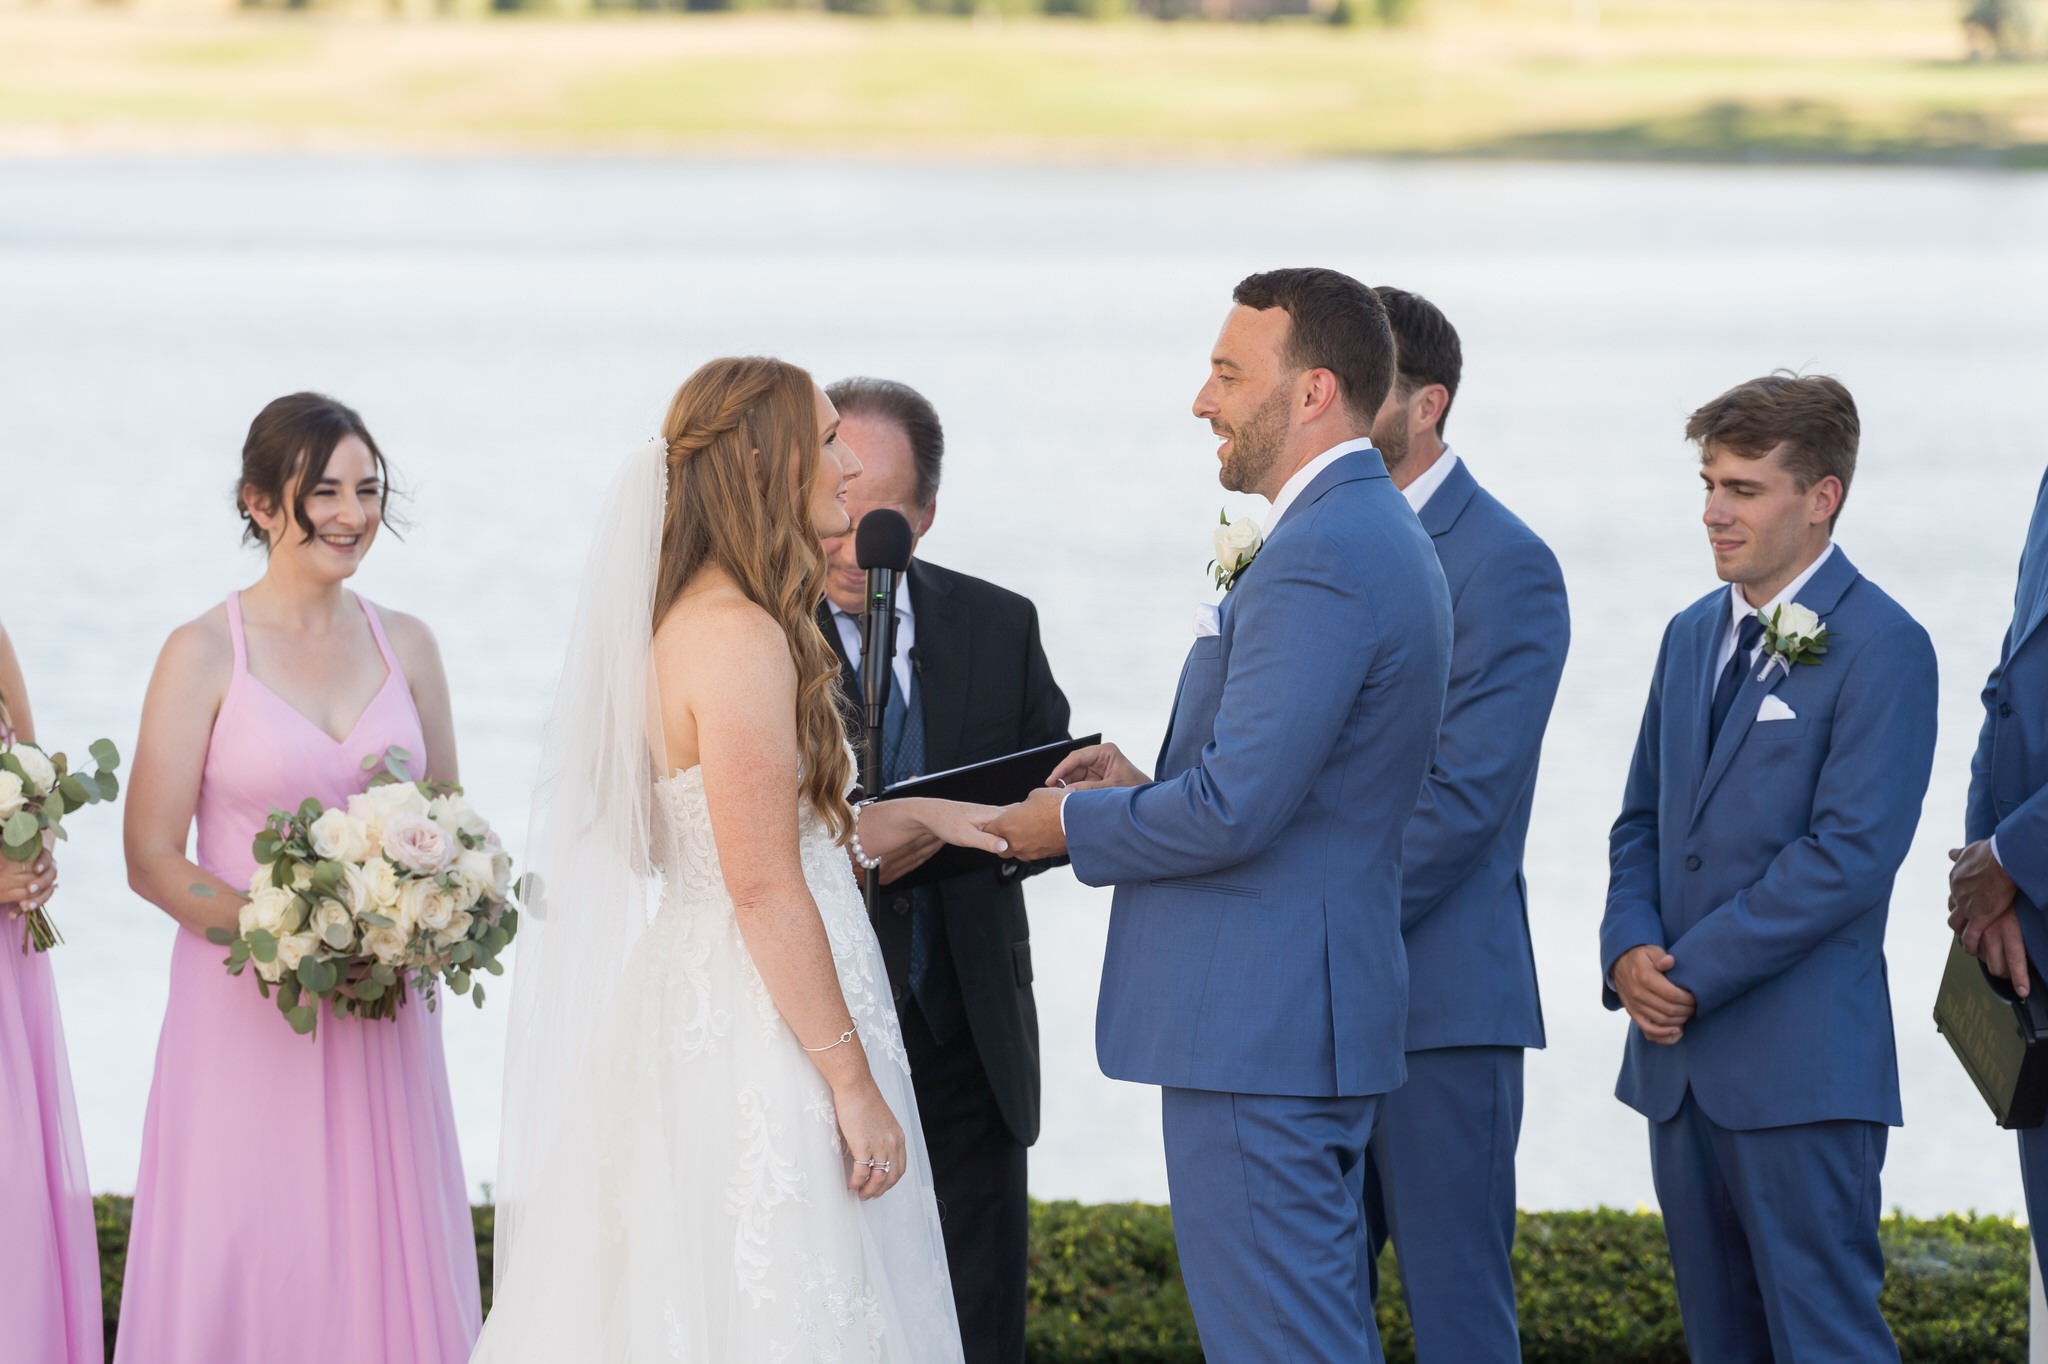 Justin and Sarah exchange rings by the lake at their Greystone Golf Club wedding in Washington, MI.  